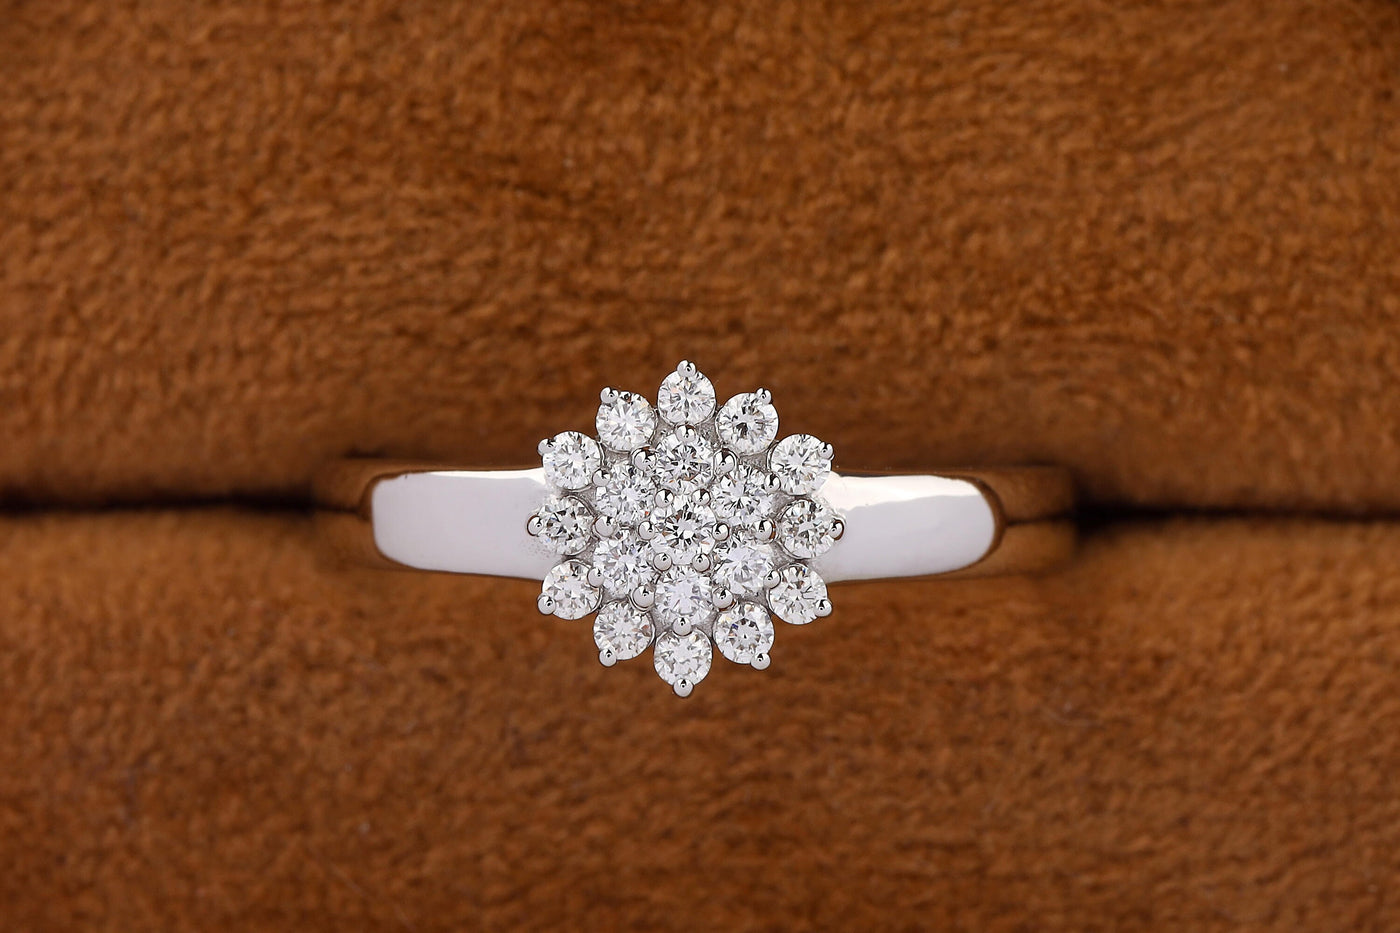 Round Cut Colorless Moissanite Engagement Ring, Cluster Moissanite Ring, 14K White Gold Ring, Anniversary Ring, Moissanite Wedding Ring Gift